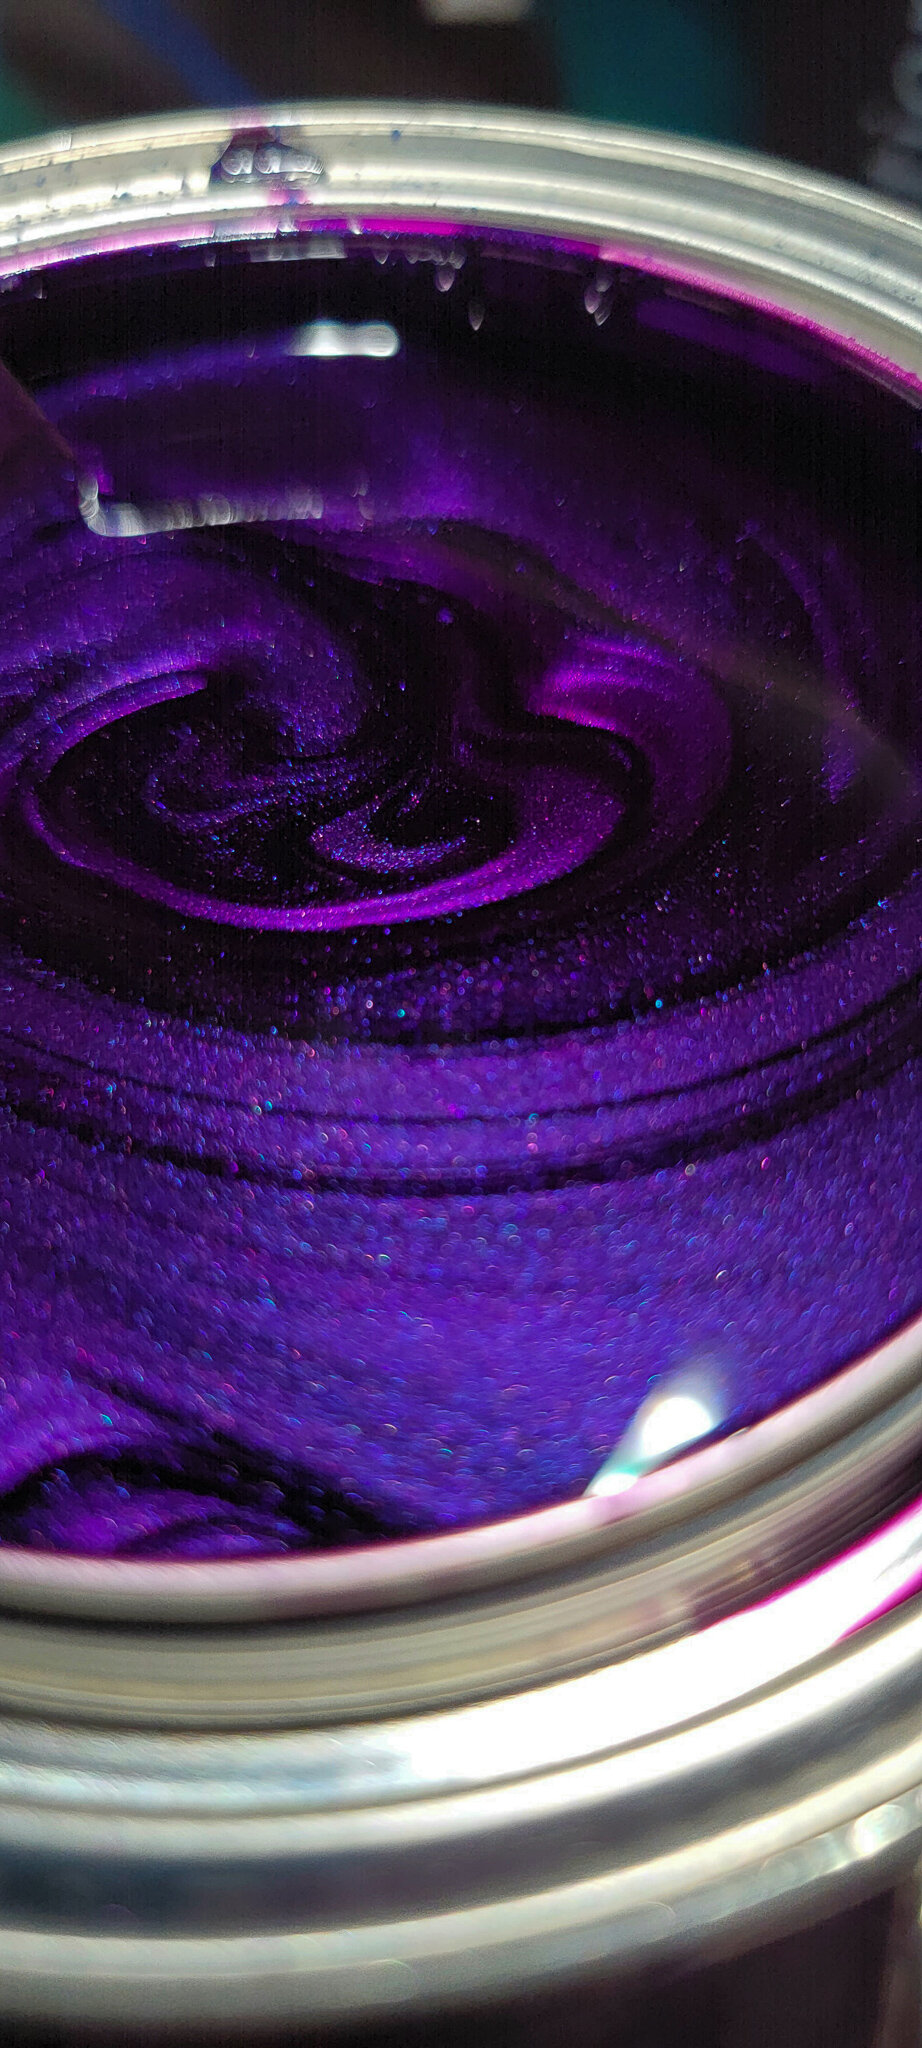 Acyrillic metallic paint comparison- purple power! 